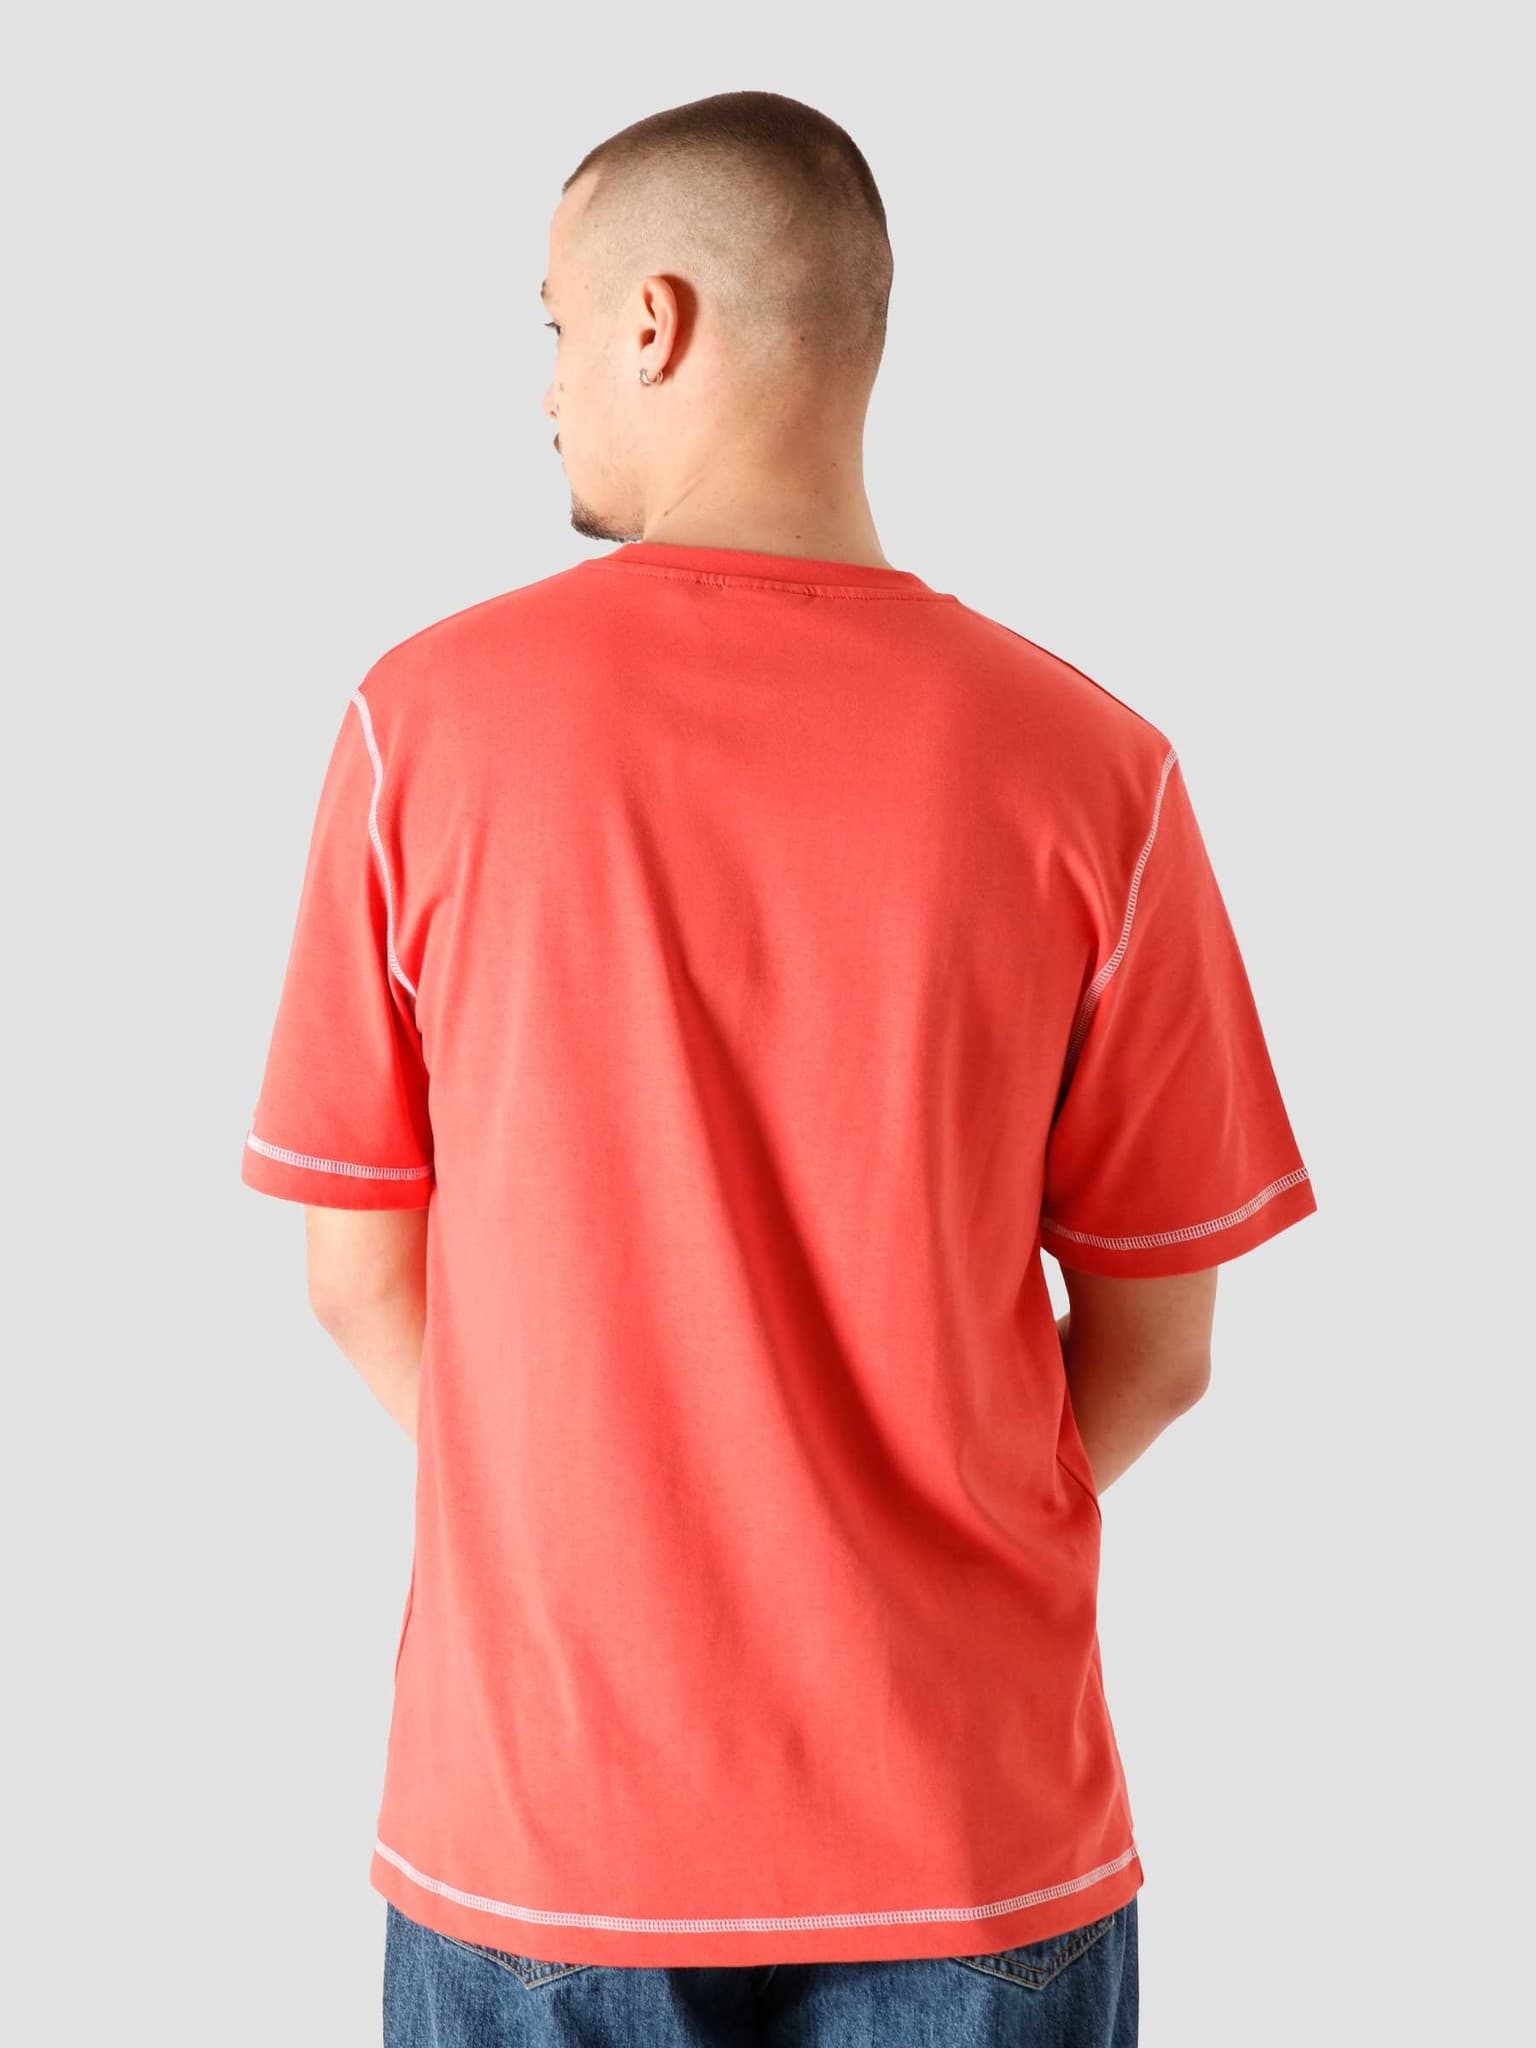 Hoshield T-Shirt Baked Orange 2021311